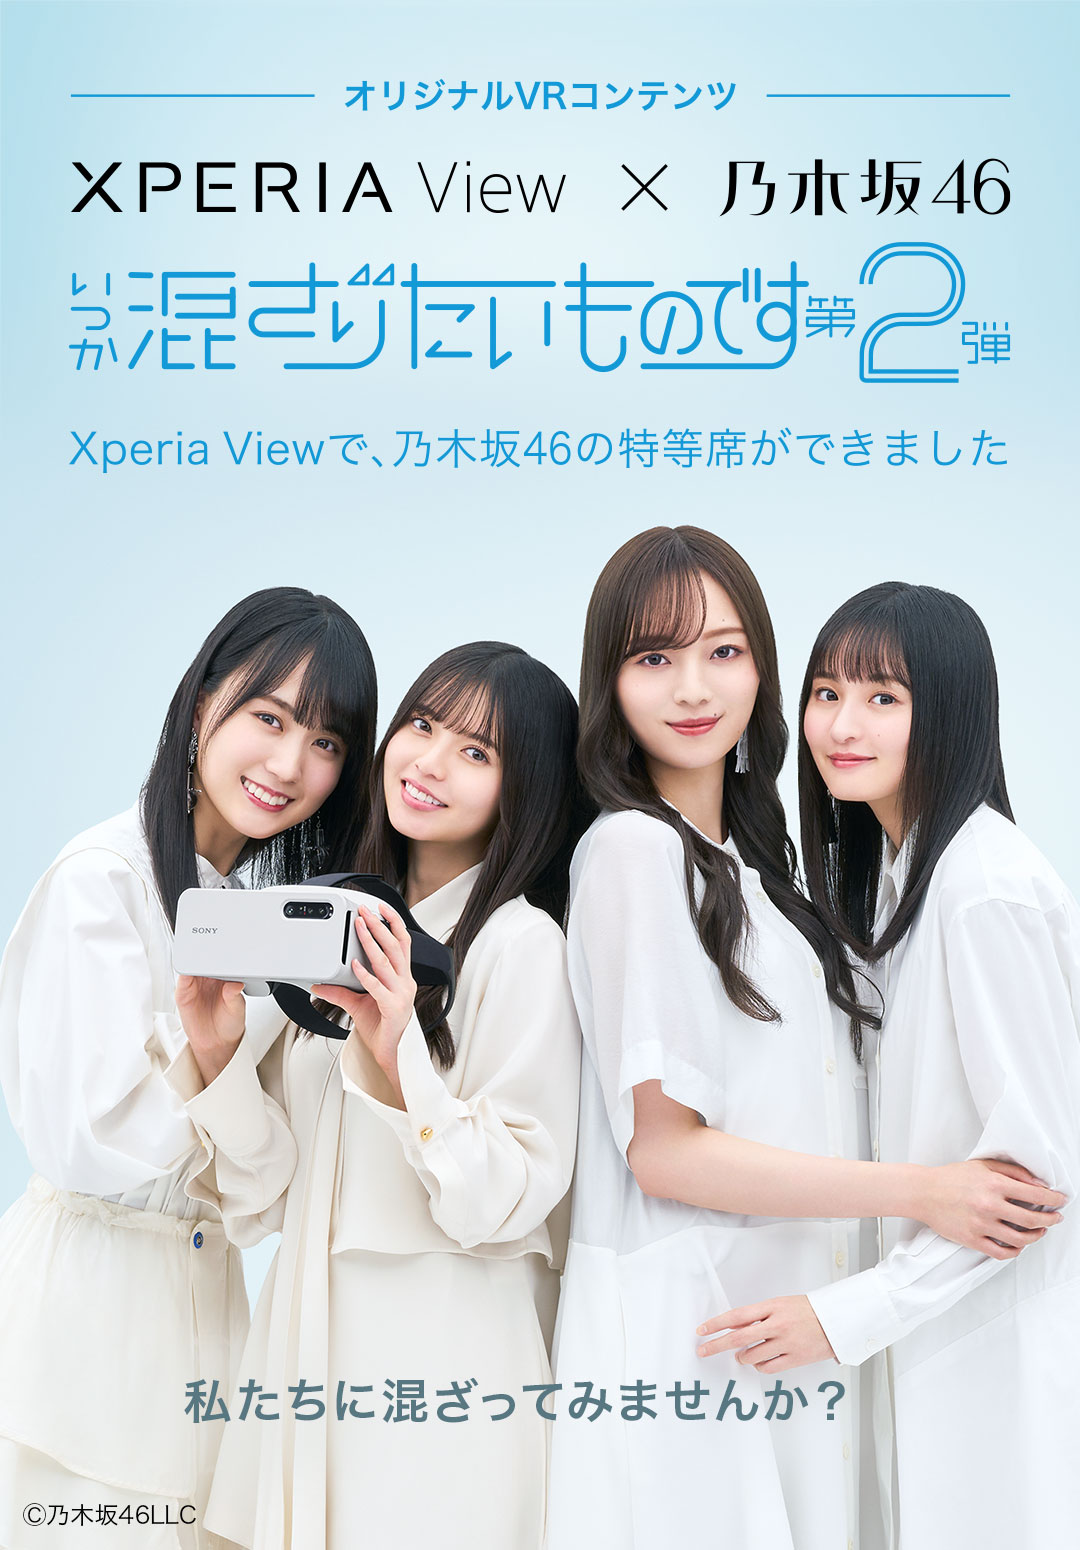 Xperia View x 乃木坂46 | Xperia View スペシャルサイト | Xperia（エクスペリア）公式サイト